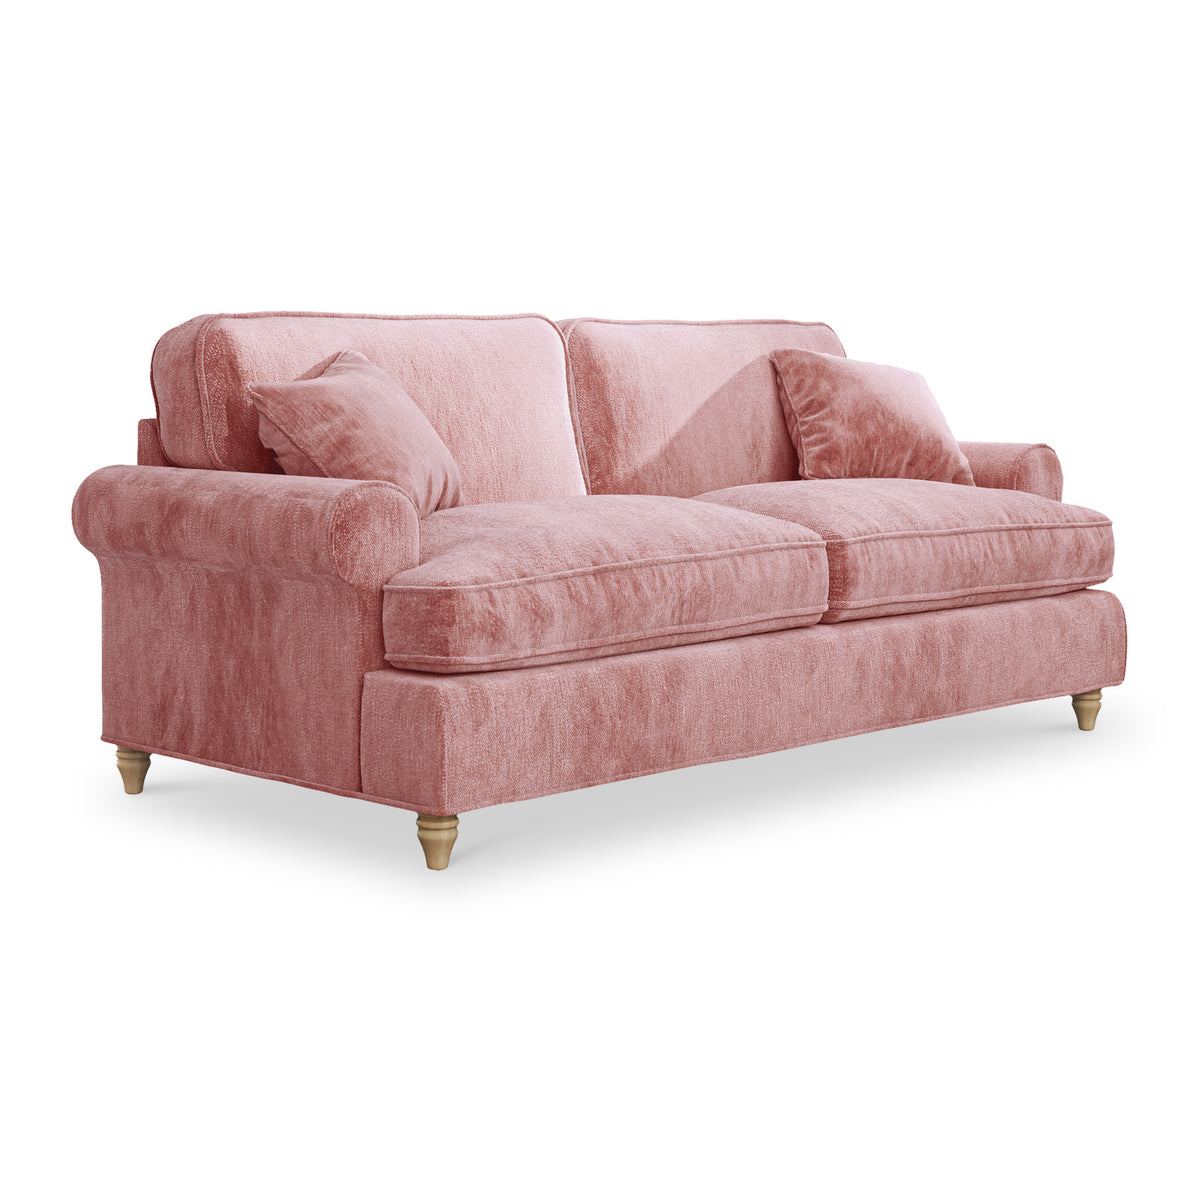 Alfie Plum Pink 3 Seater Sofa from Roseland Furniture